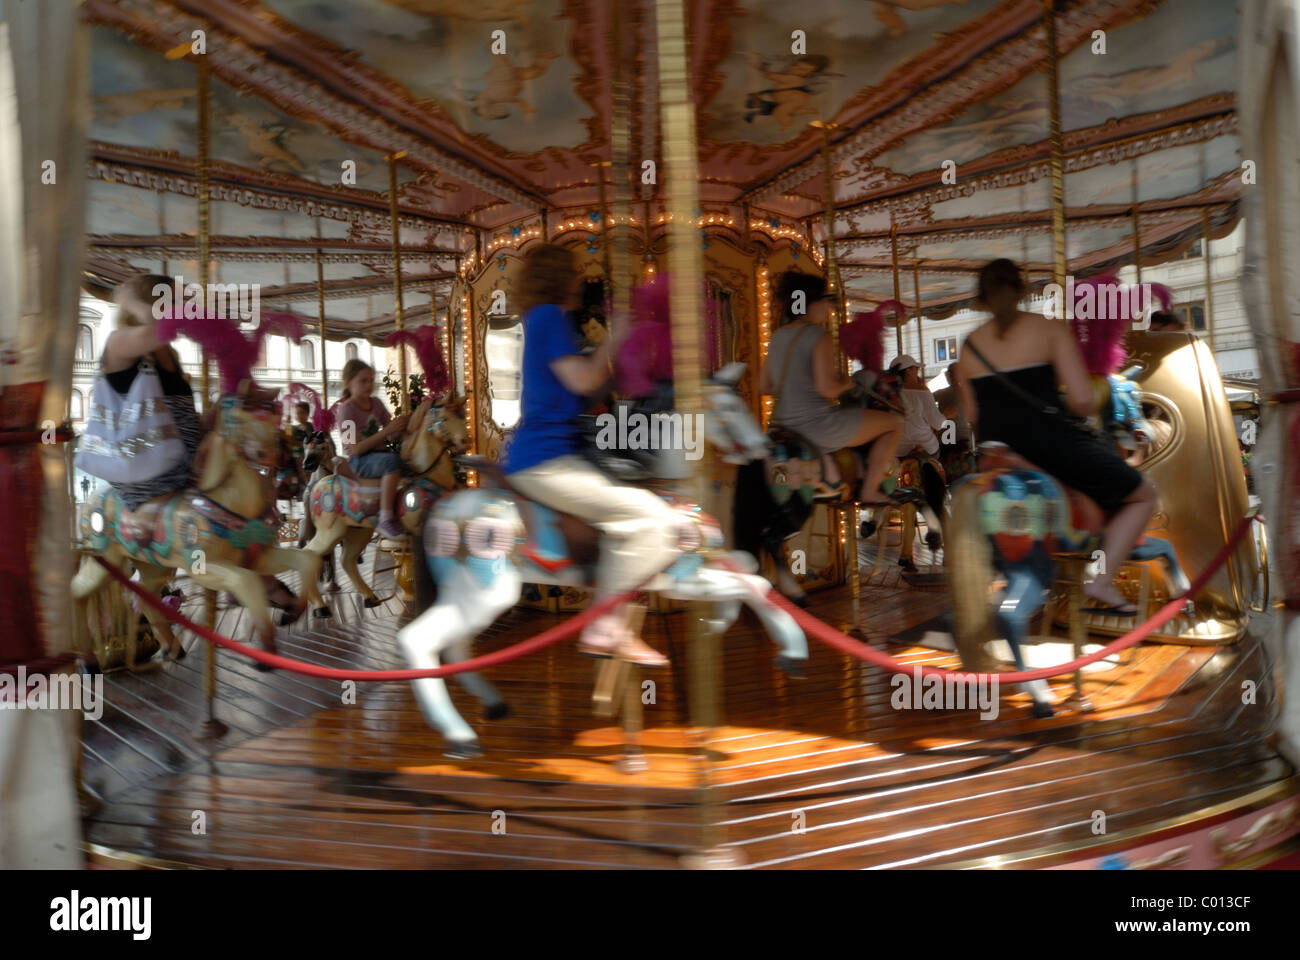 Carousel merry-go-round en action, Firenze, Italie Banque D'Images